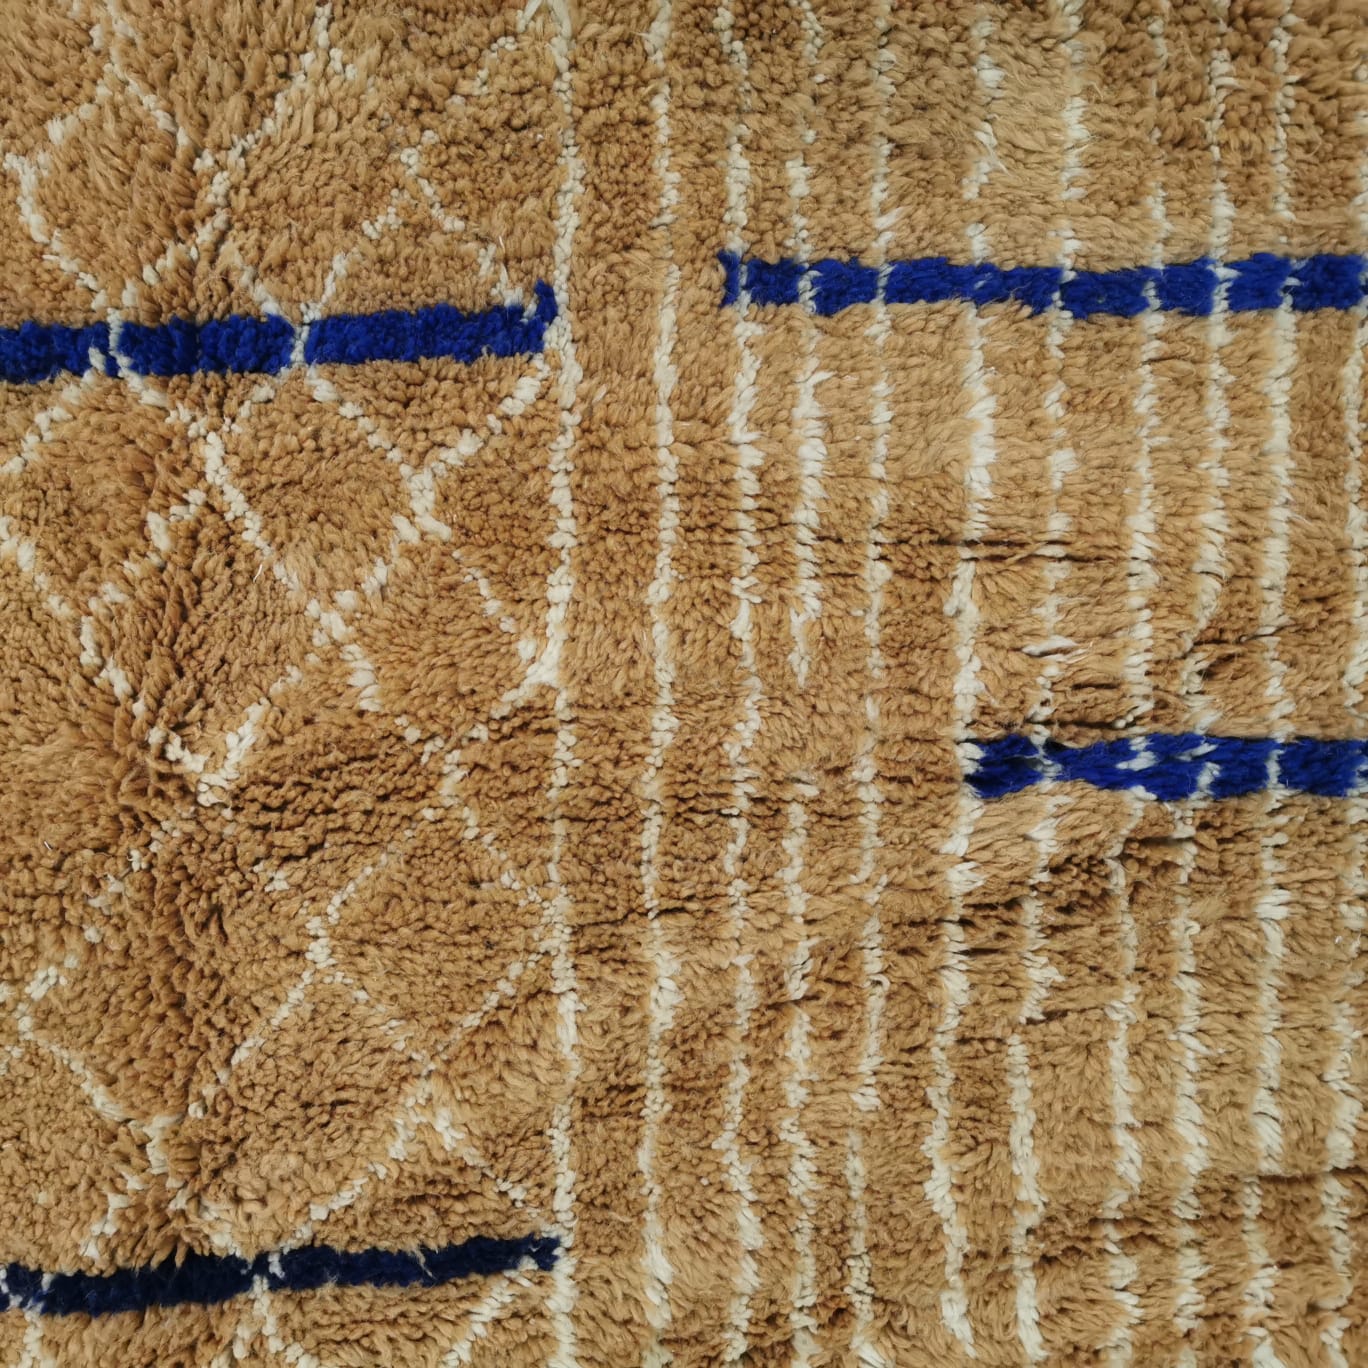 Moroccan Berber Wool Rug - Bespoke Design Handcrafted